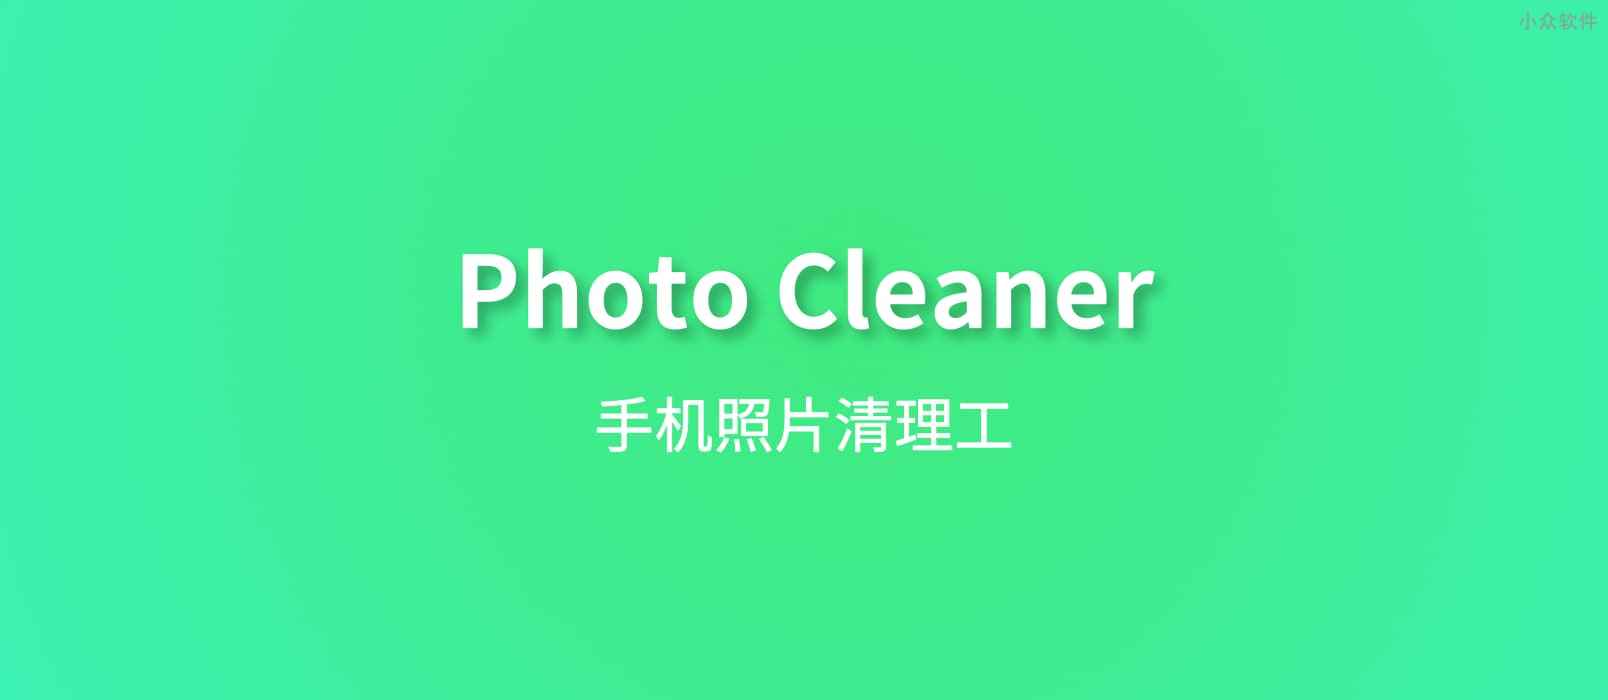 Photo Cleaner - 快速删除照片[iPhone/iPad 限免] 1